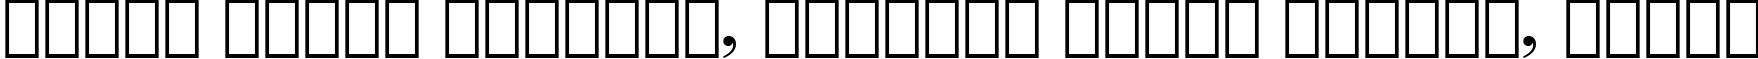 Пример написания шрифтом Bodoni Bold Italic BT текста на белорусском